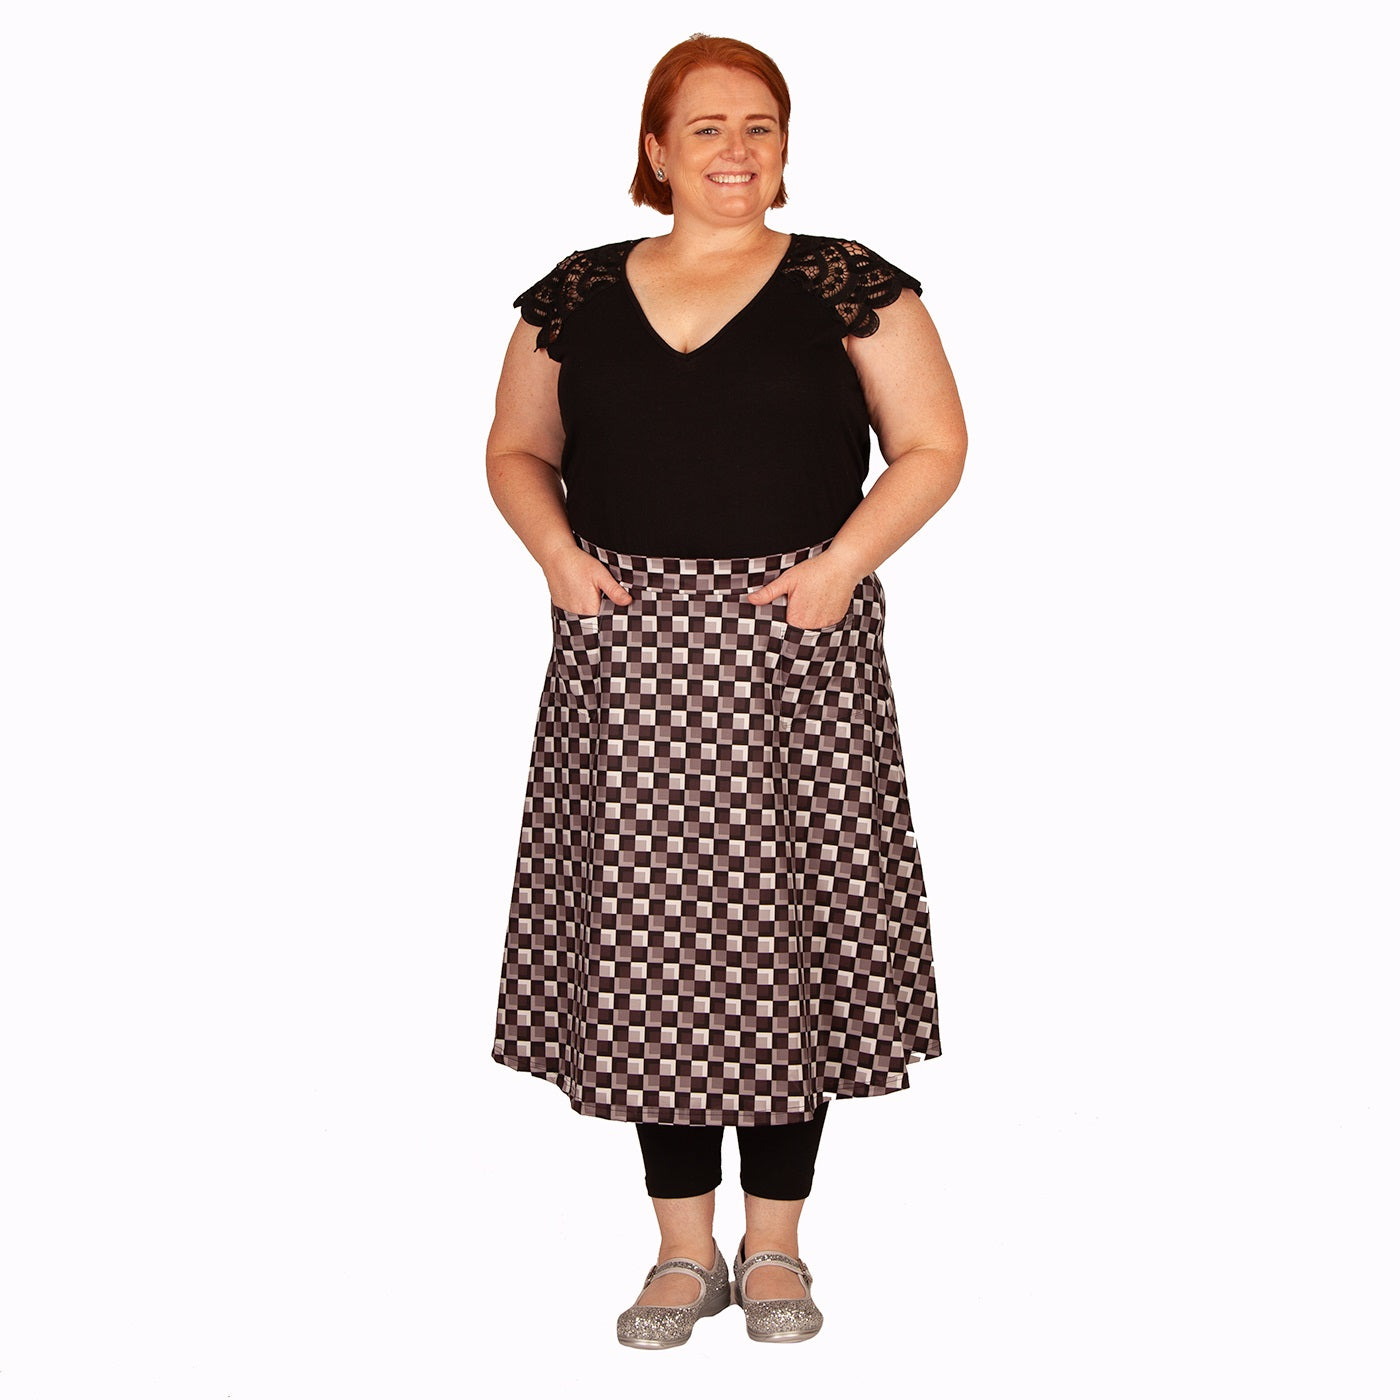 Too Square Original Skirt by RainbowsAndFairies.com (Black White Grey Check - Monochrome - Stripes - Skirt With Pockets - Aline Skirt - Vintage Inspired - Rock & Roll) - SKU: CL_OSKRT_TOOSQ_ORG - Pic 05